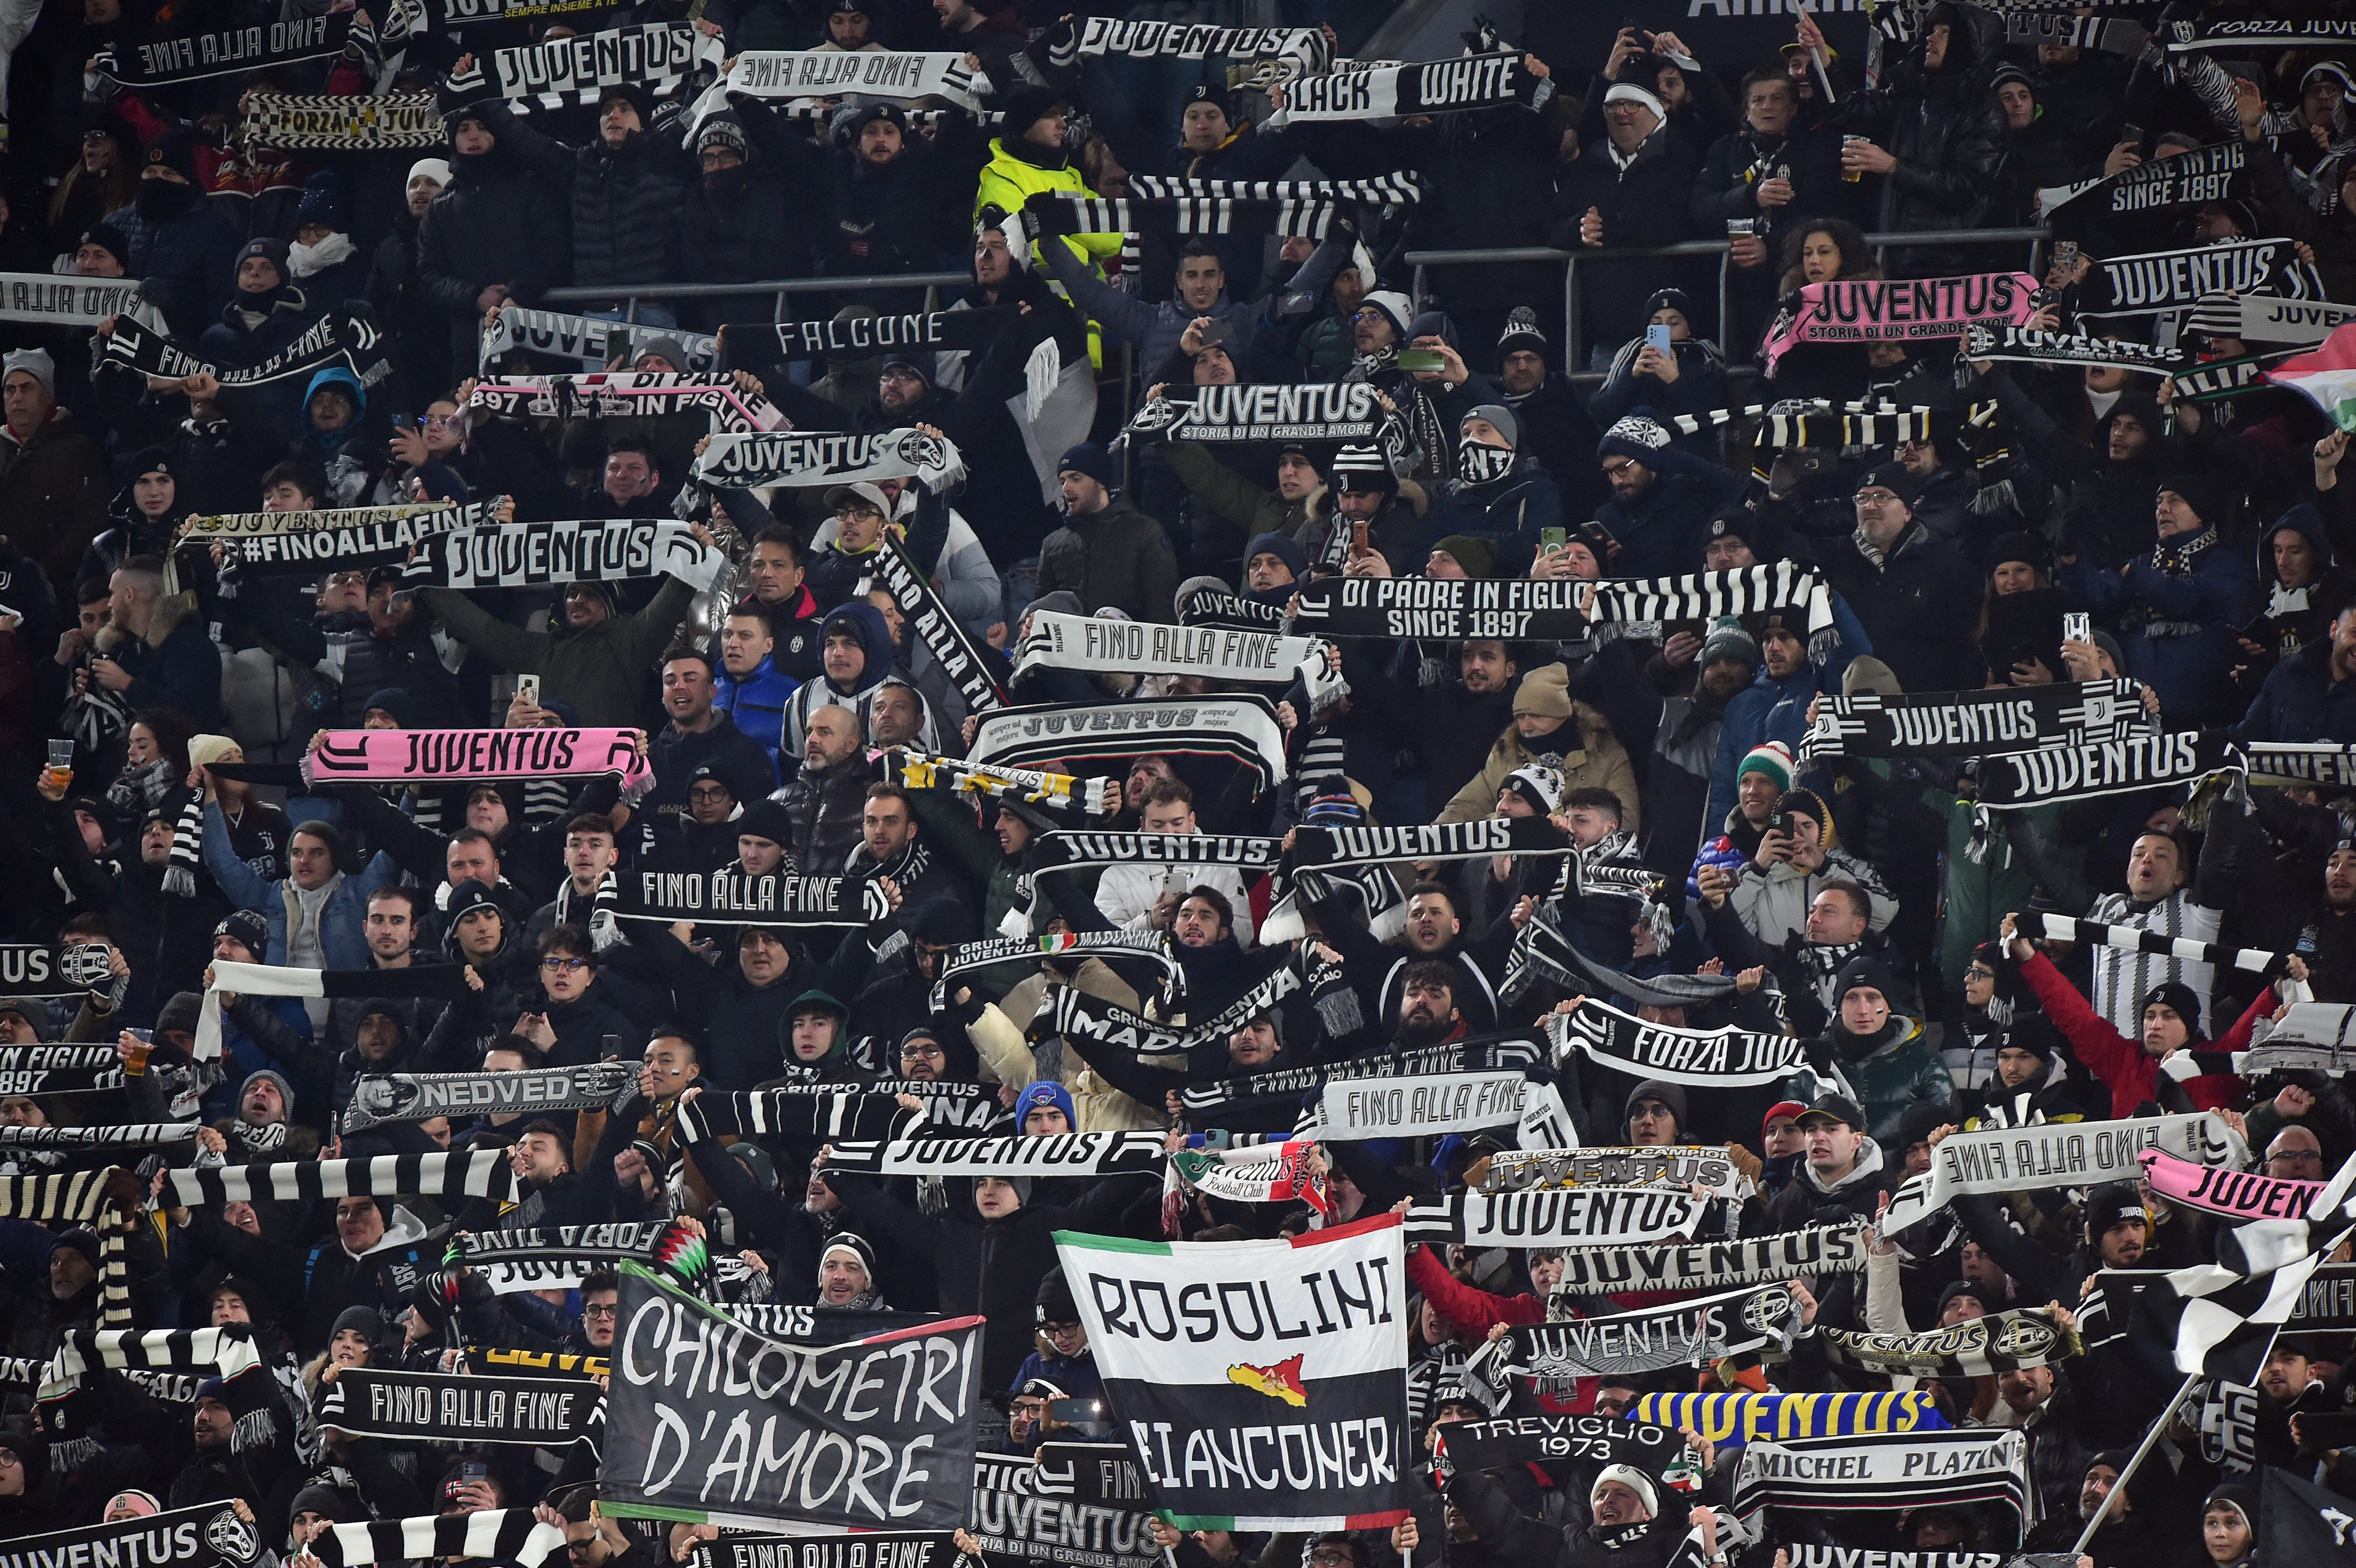 variabel mord Et kors Juventus says first half loss shrinks as pandemic impact fades | Reuters